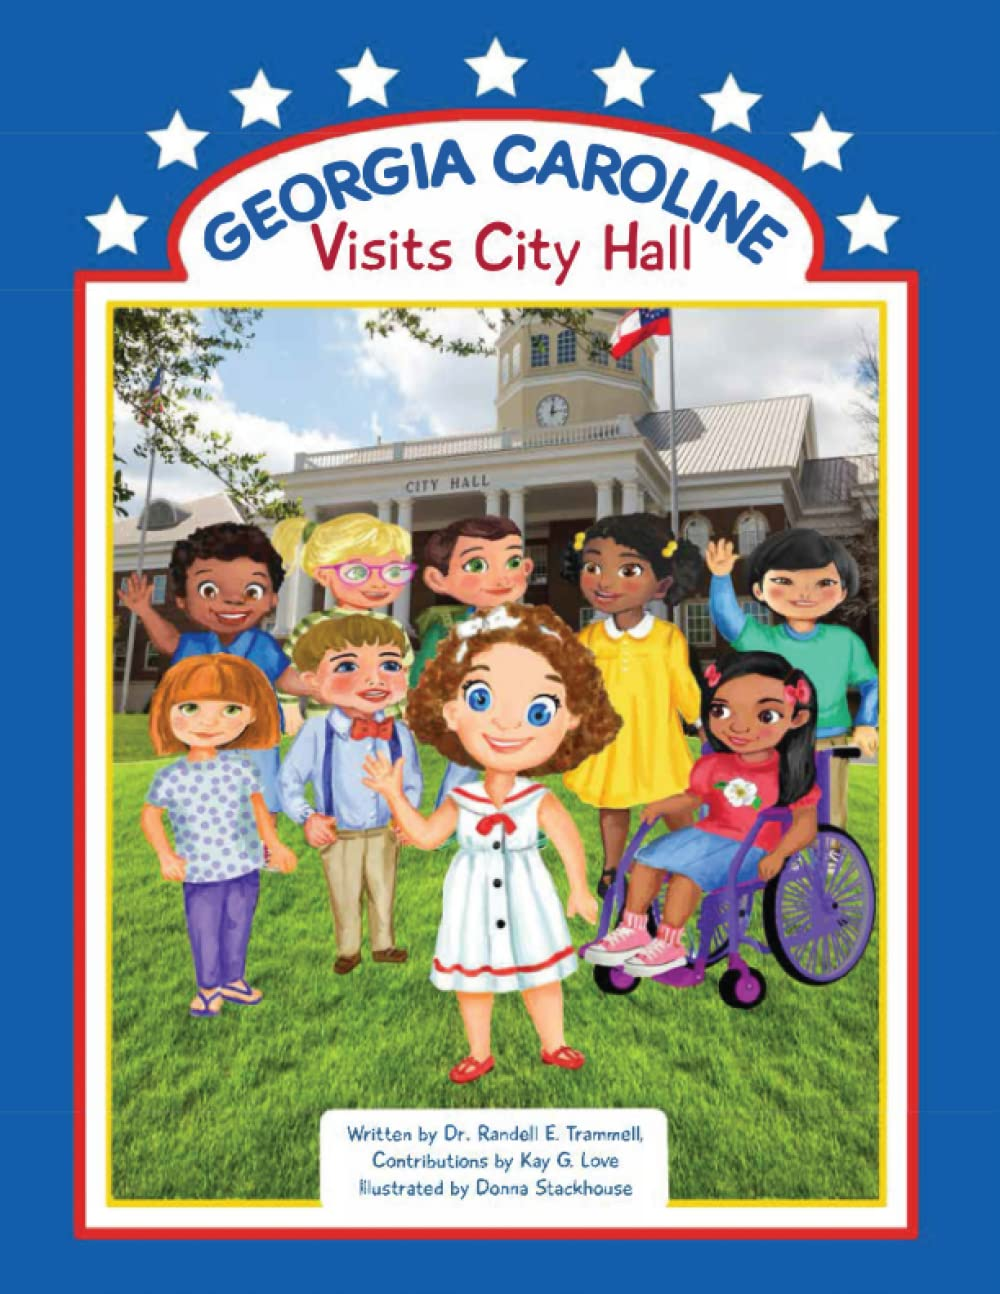 Georgia Caroline Visits City Hall